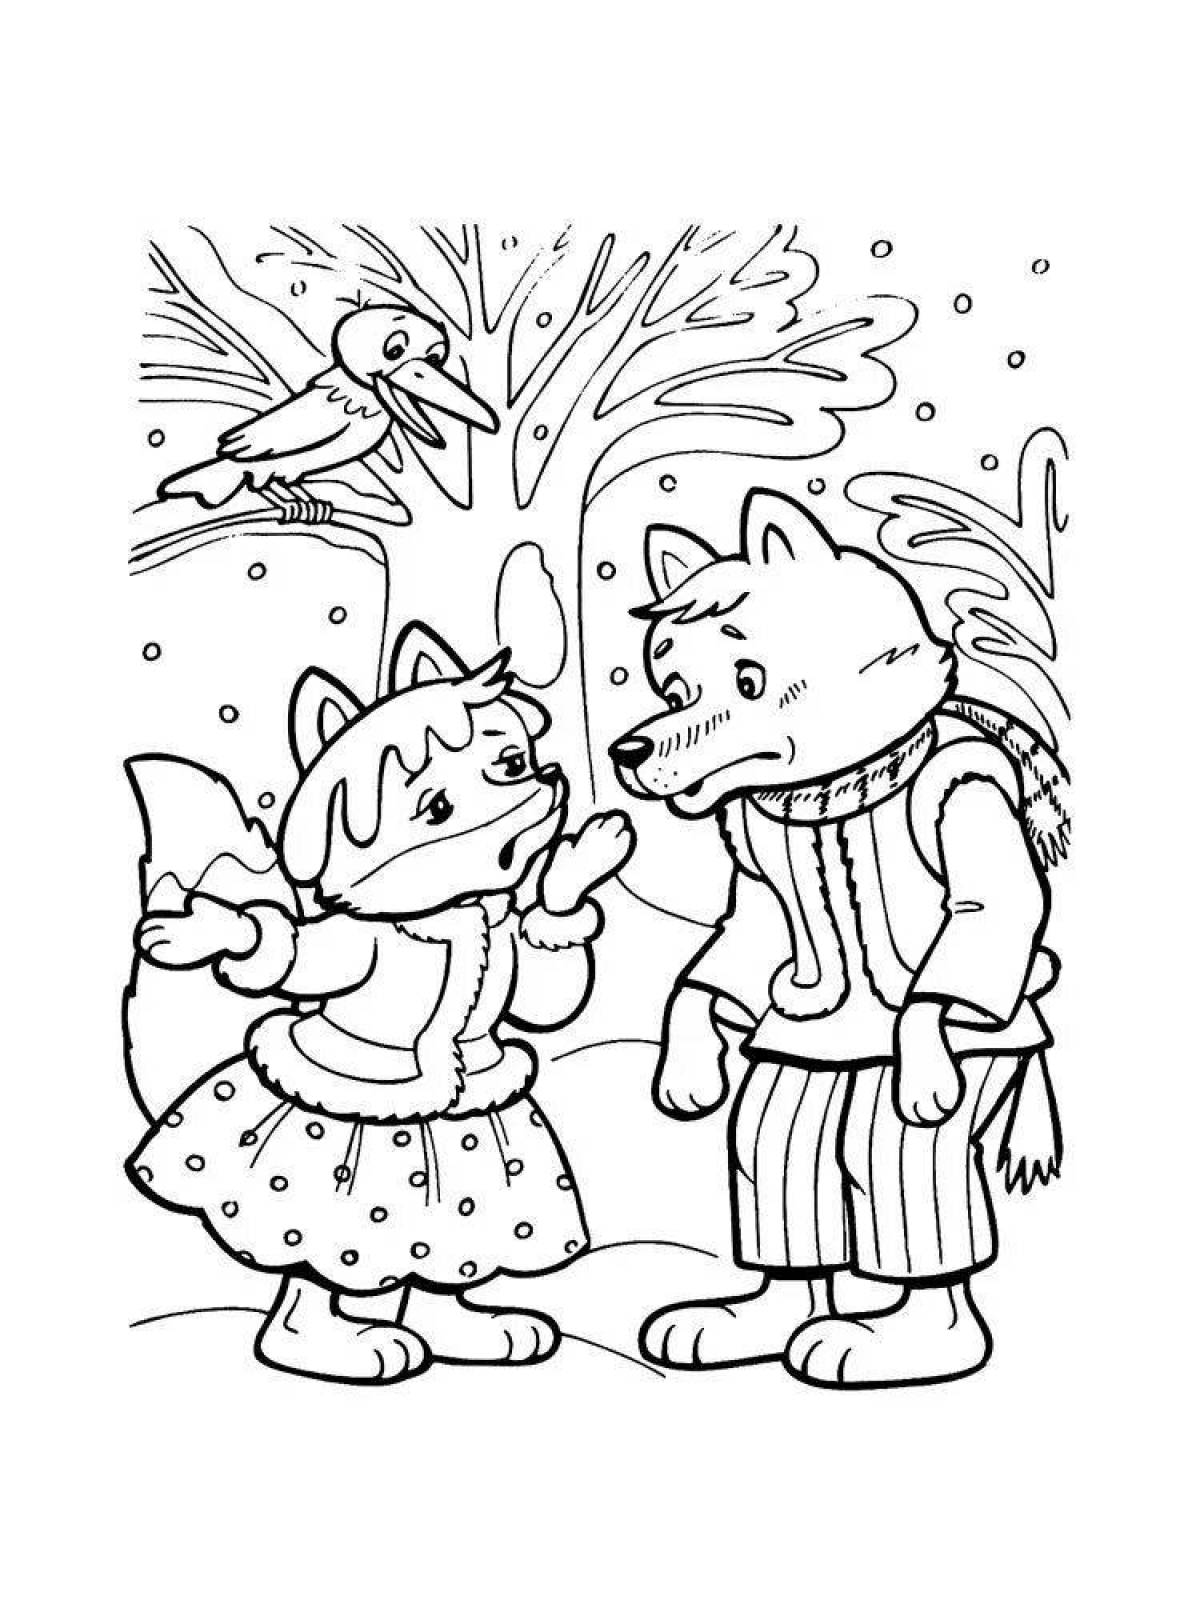 Amazing coloring book winter hut of animals Russian folk tale